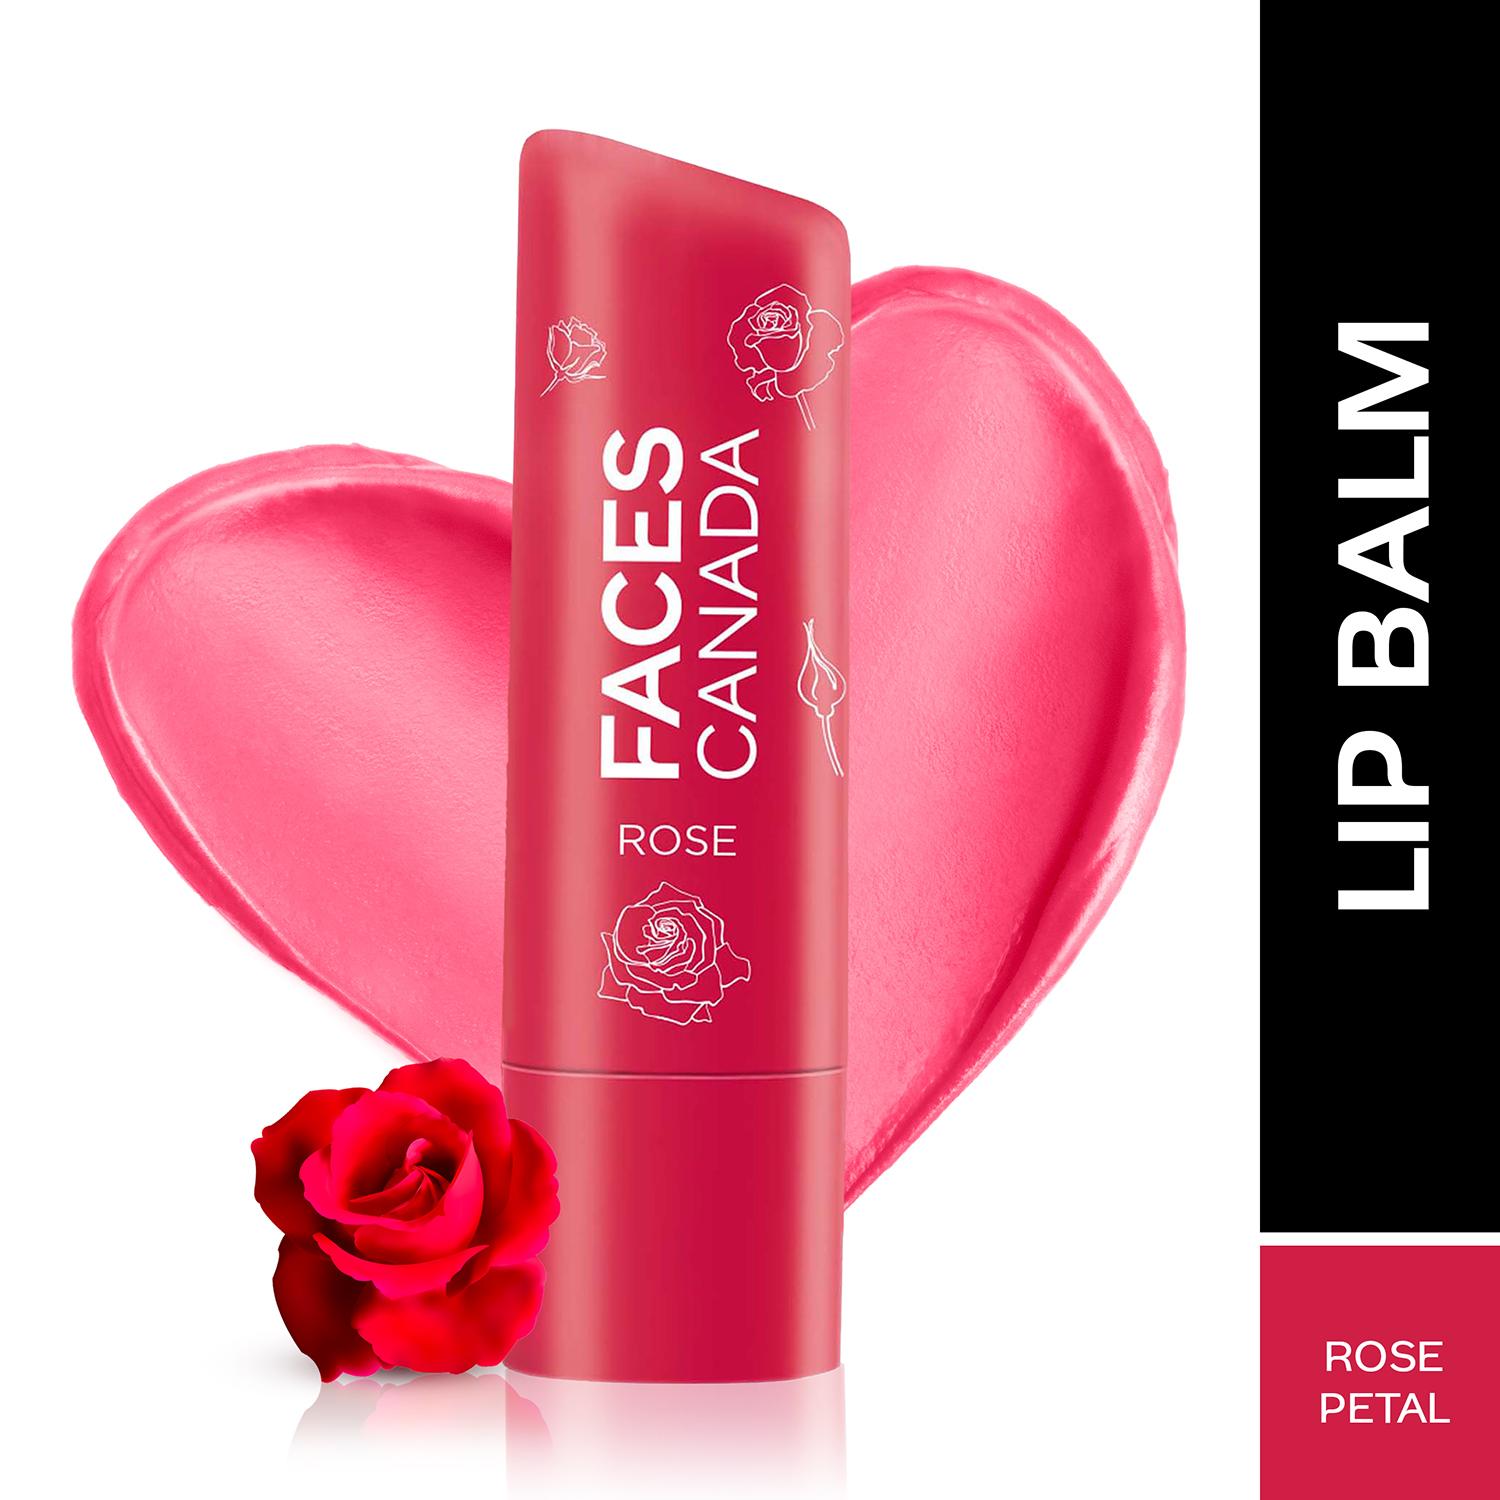 Faces Canada | Faces Canada Color Lip Balm - Rose Petal 03, Red Tint, SPF 15, 12 HR Moisturization (4.5 g)